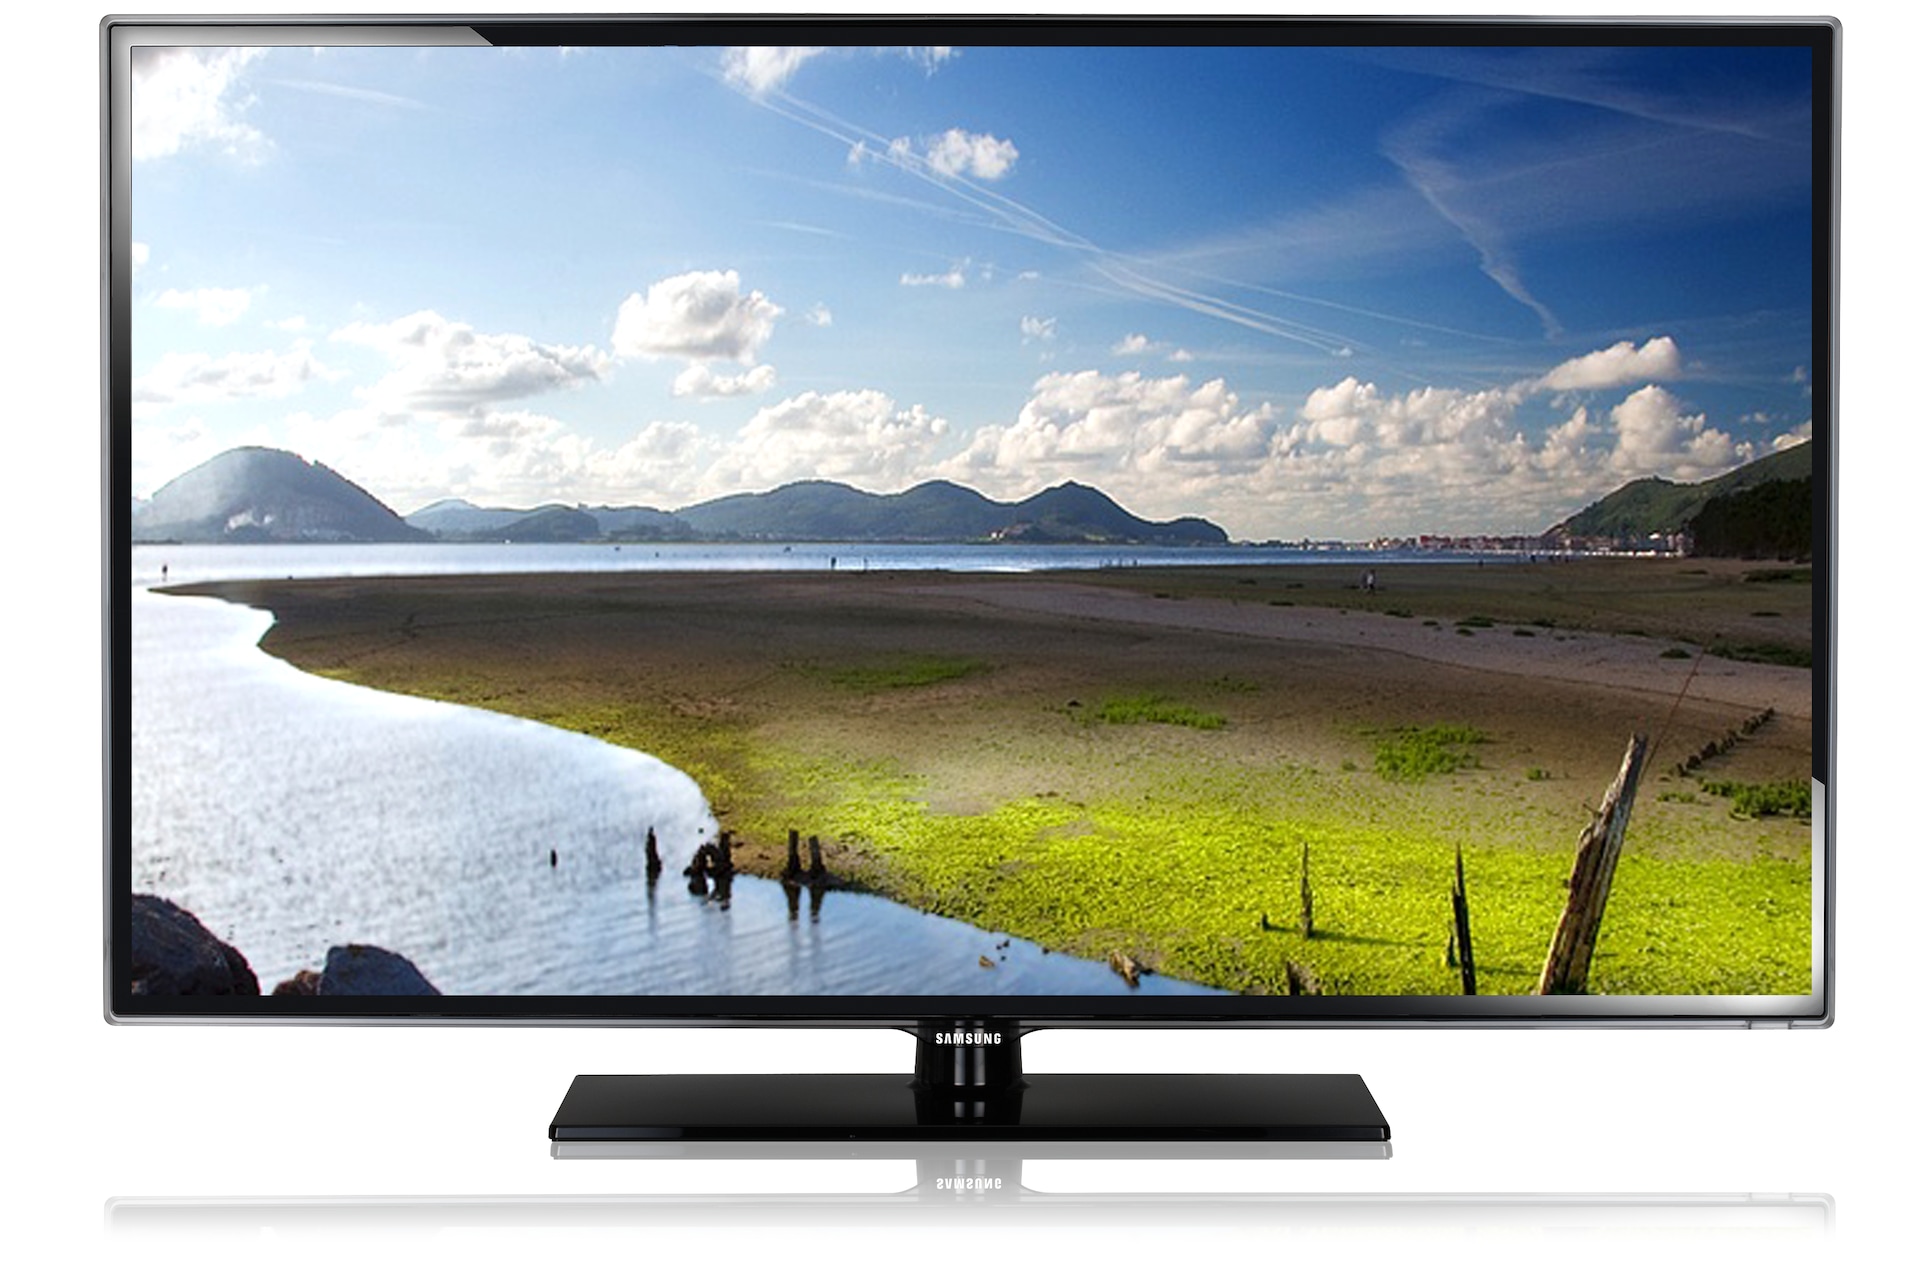 Телевизор es pro 65. Телевизор Smart TV 40 дюймов. Телевизор самсунг 40 дюймов. Телевизор самсунг led f5000:. Samsung 5600 40 дюймов.